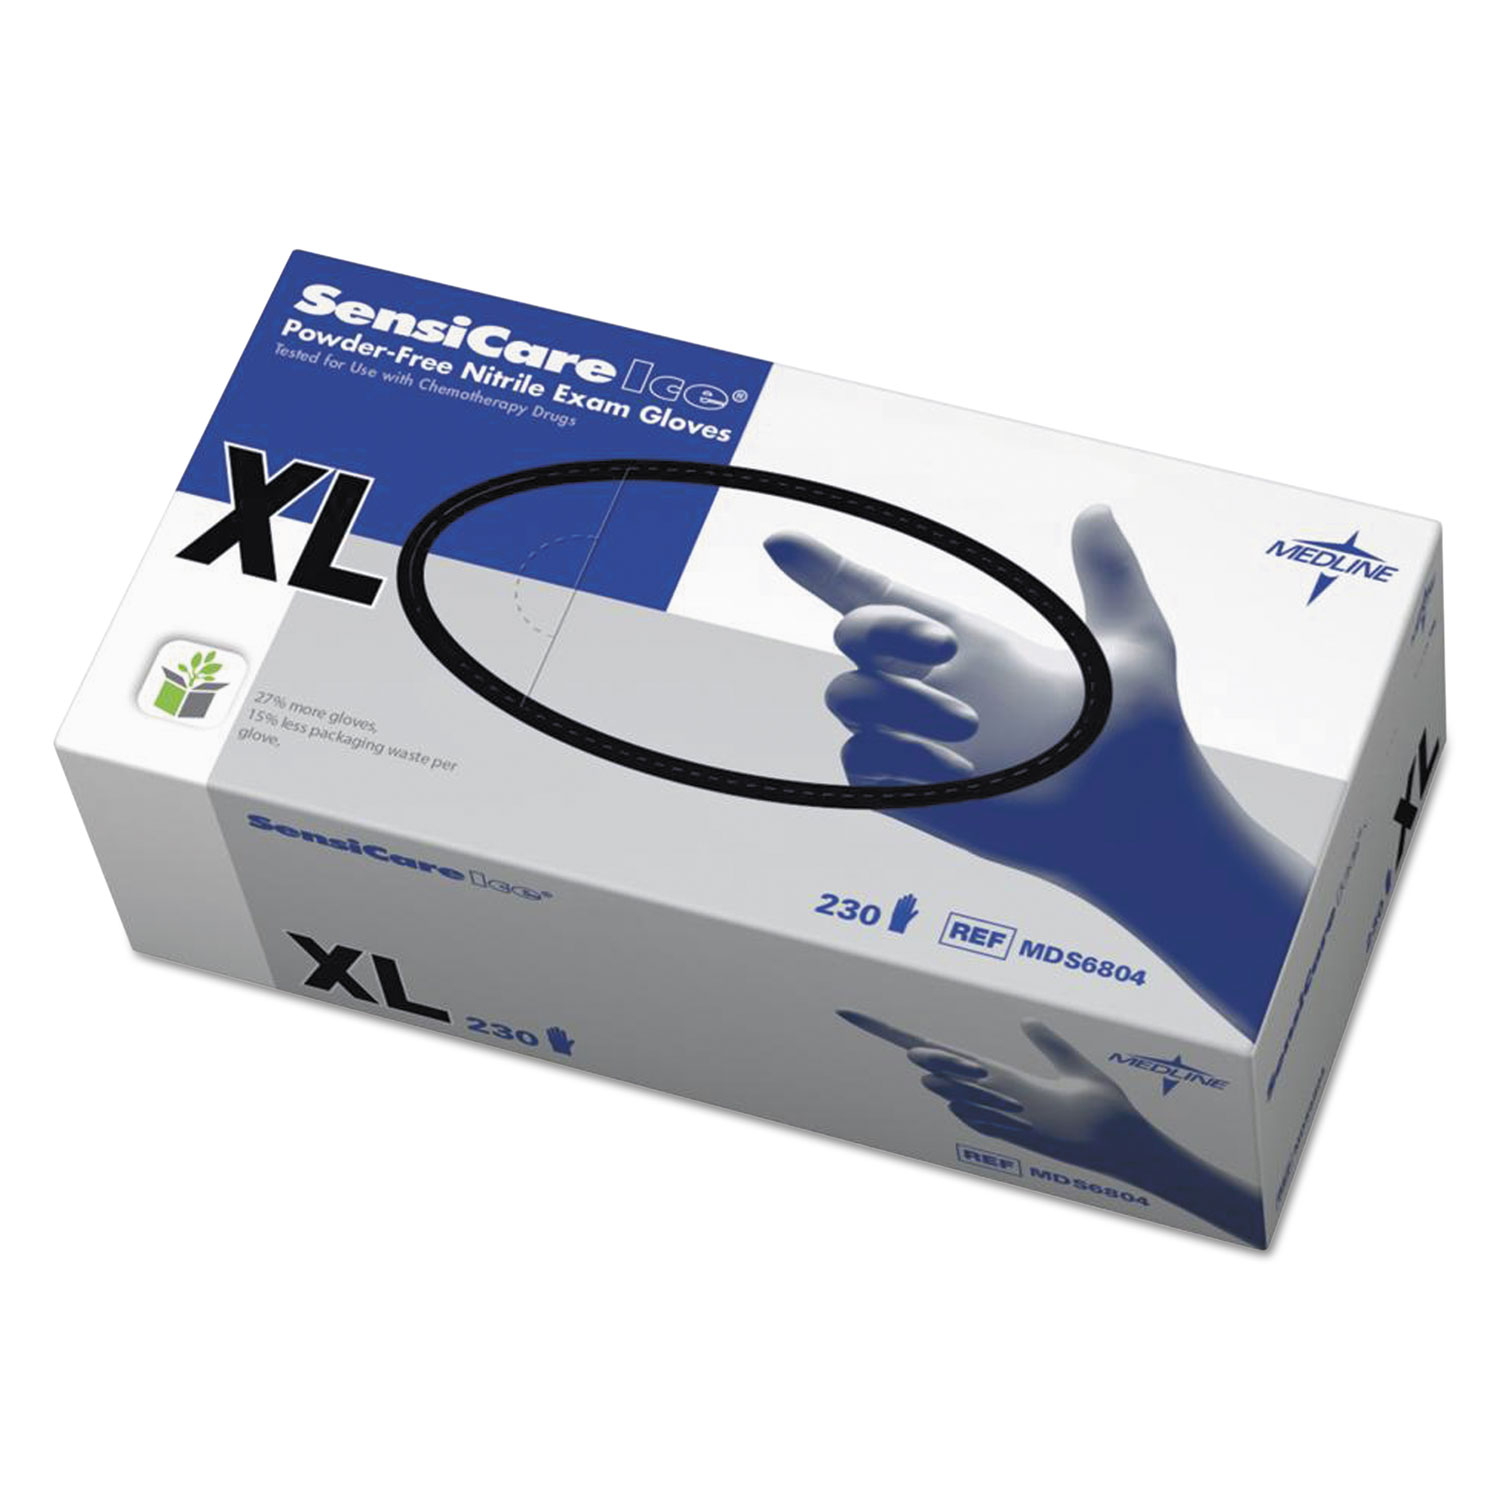  Medline MDS6804 Sensicare Ice Nitrile Exam Gloves, Powder-Free, X-Large, Blue, 230/Box (MIIMDS6804) 